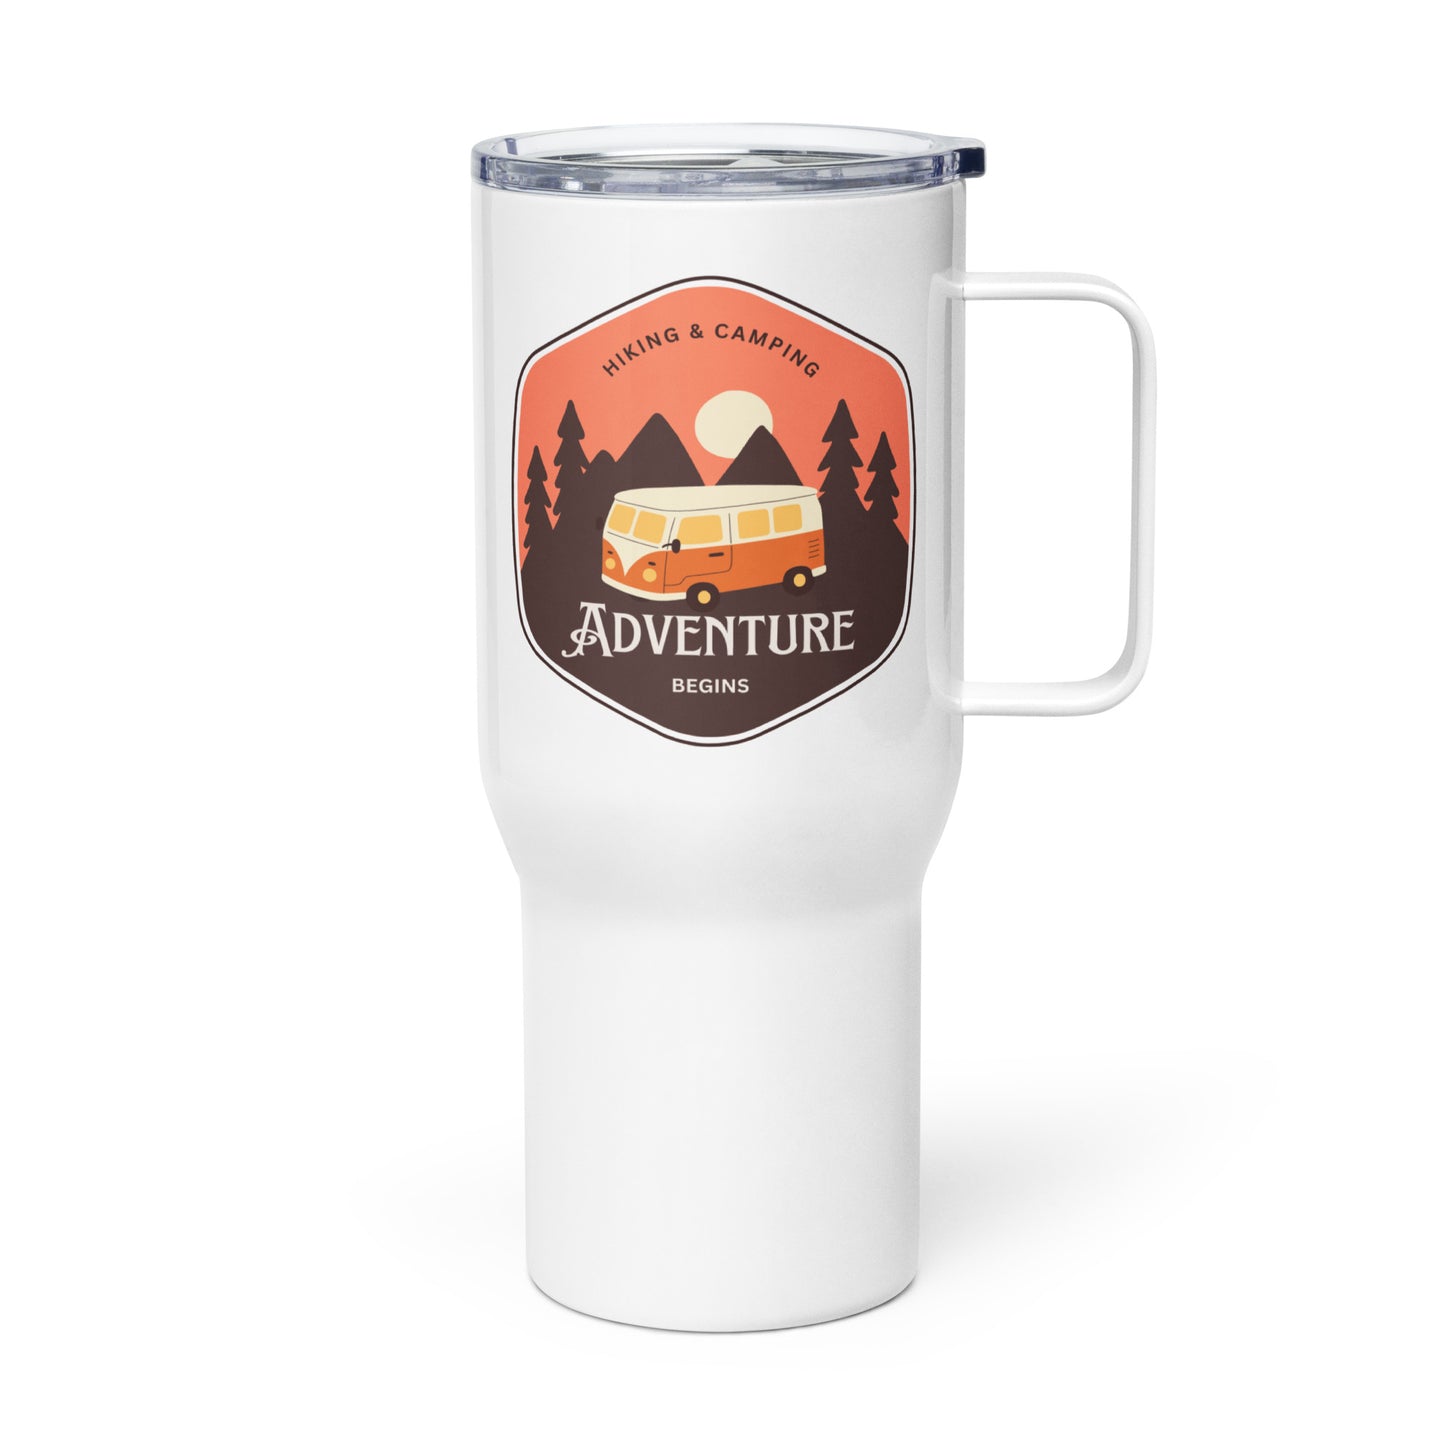 Travel mug with a handle 'Hiking&Camping'